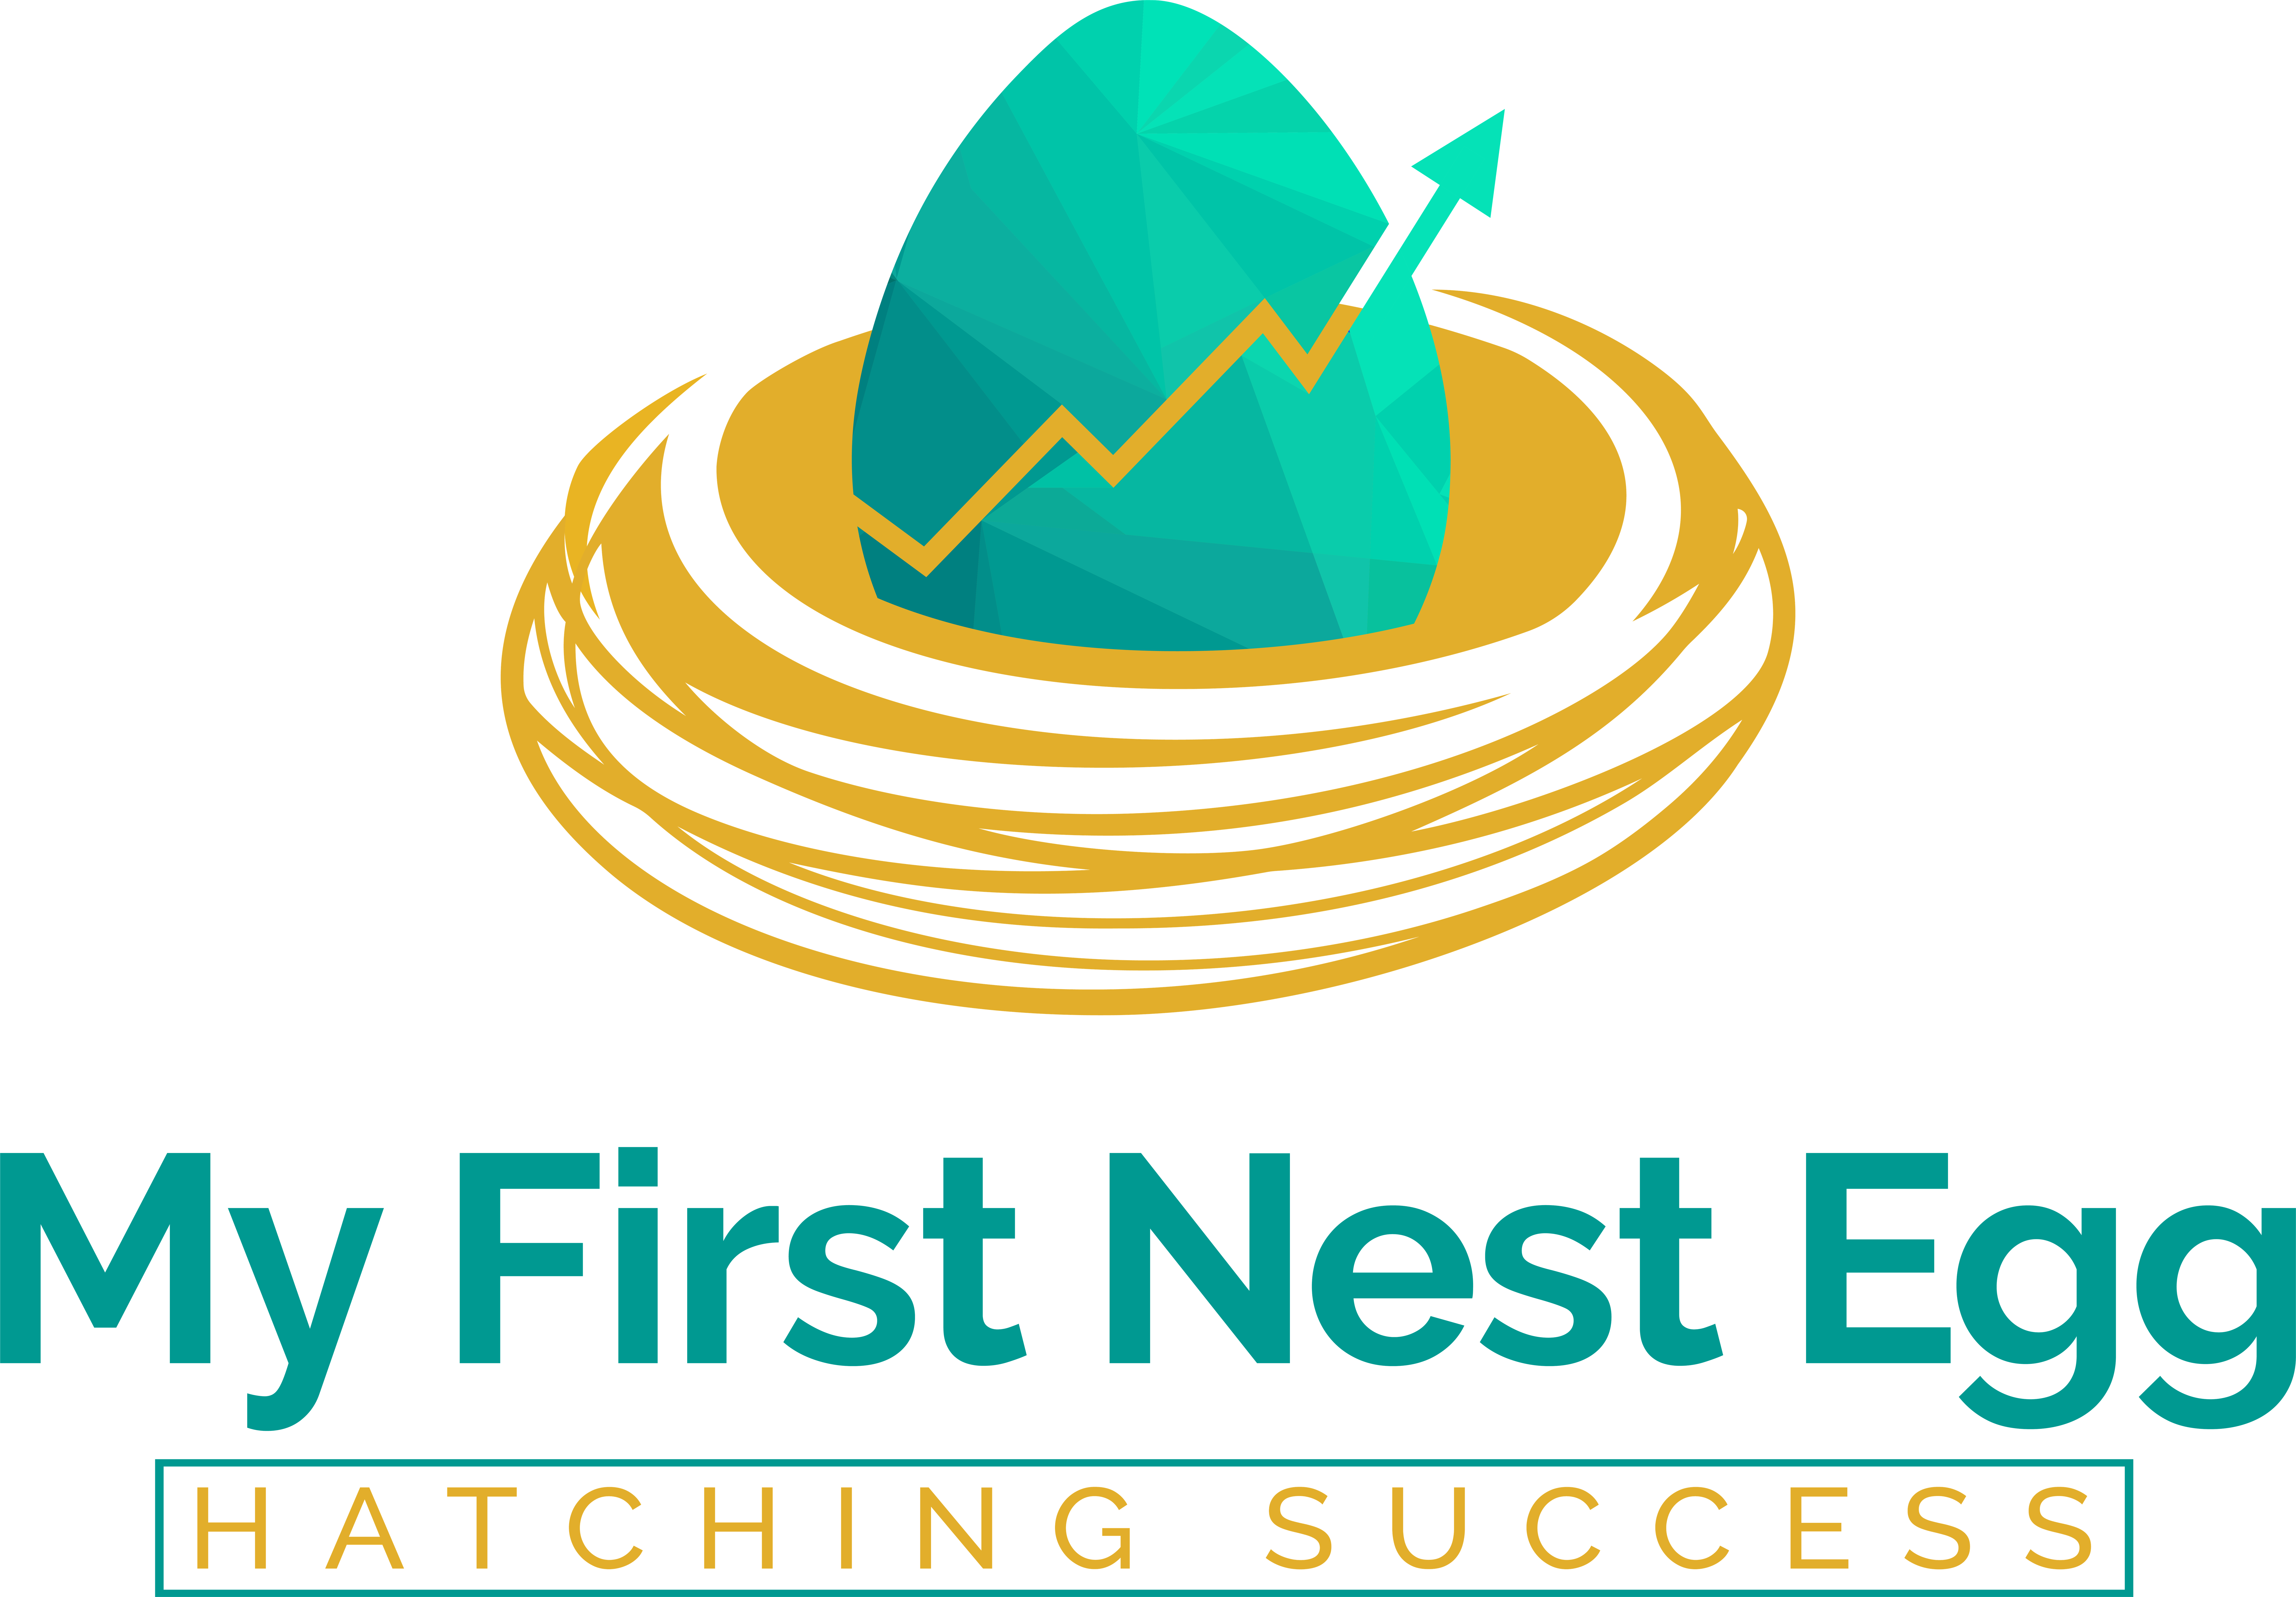 My First Nest Egg logo